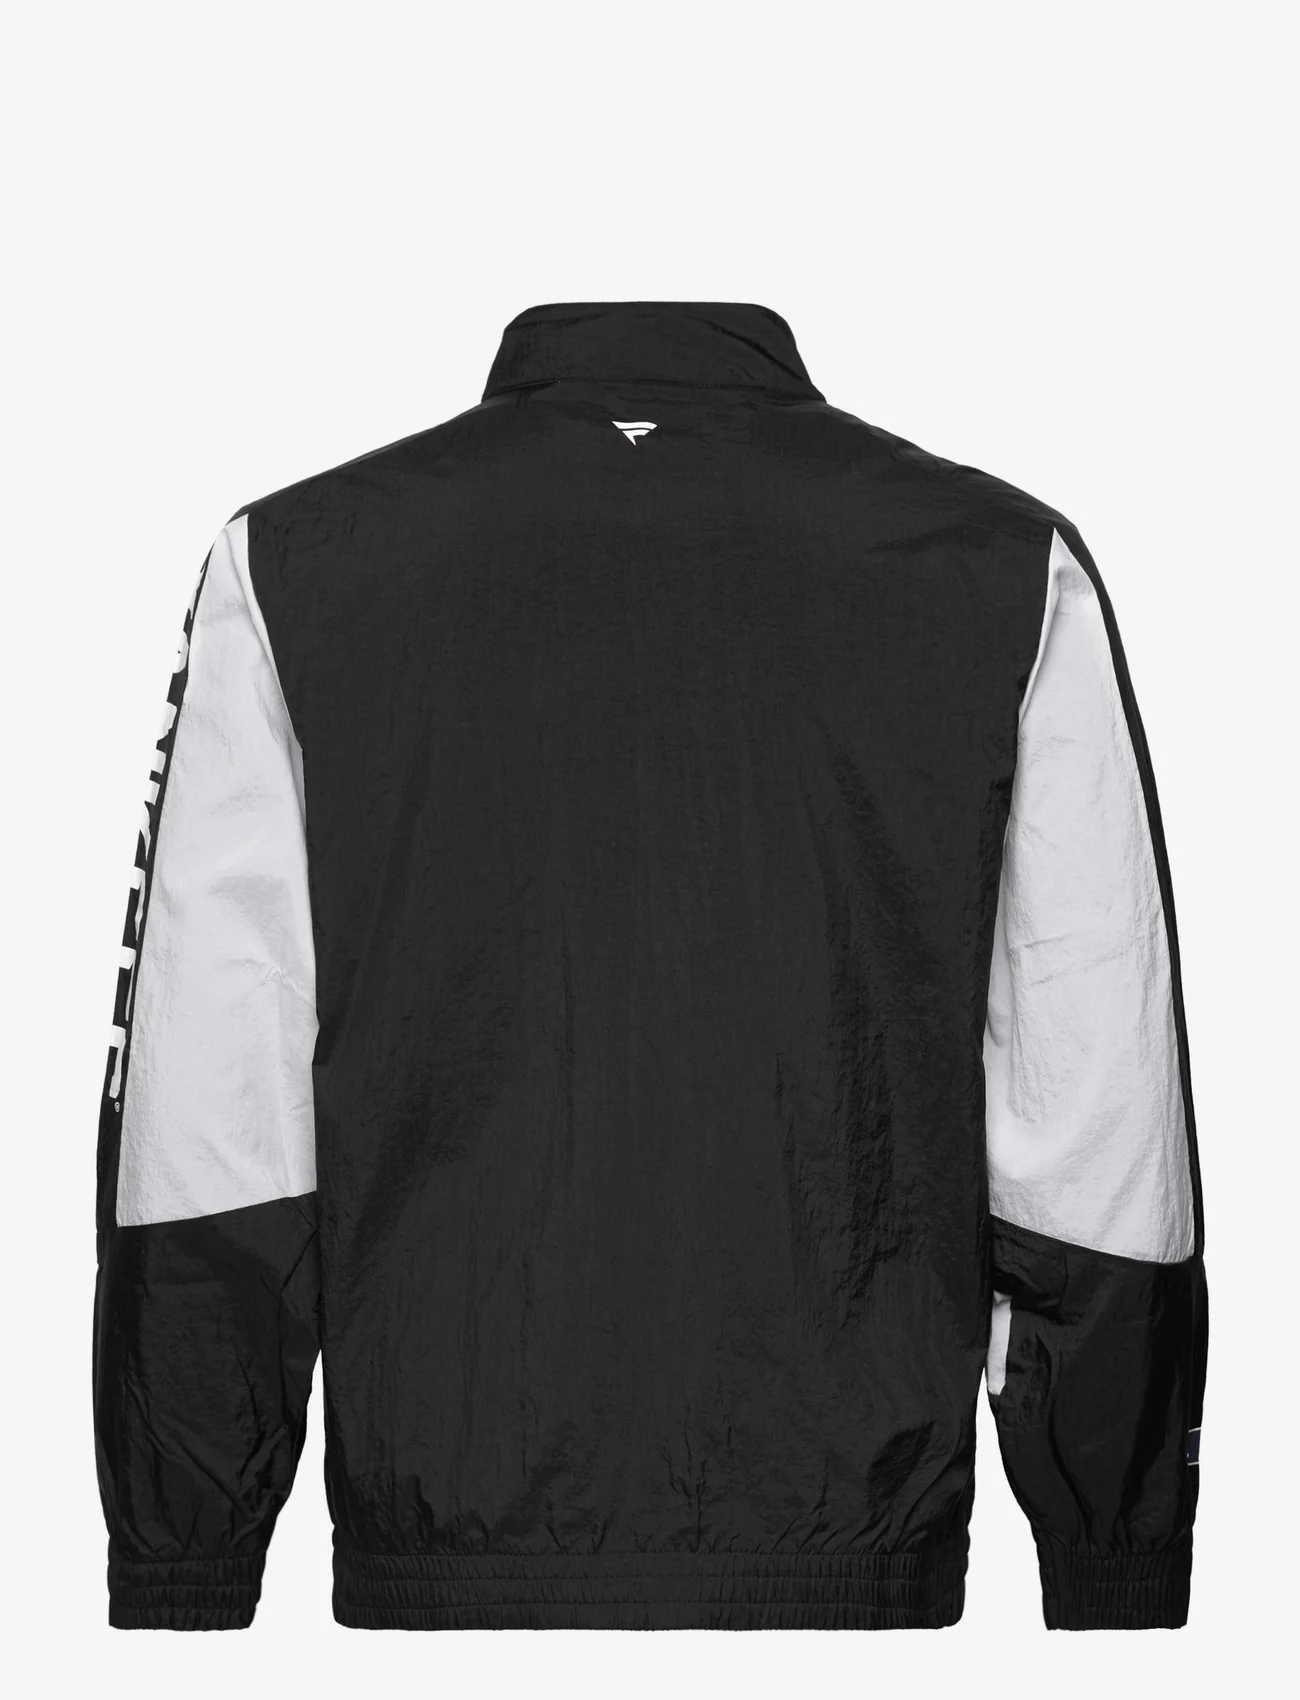 Fanatics - New York Yankees Woven Track Jacket - plus size & curvy - black, black, white, black - 1